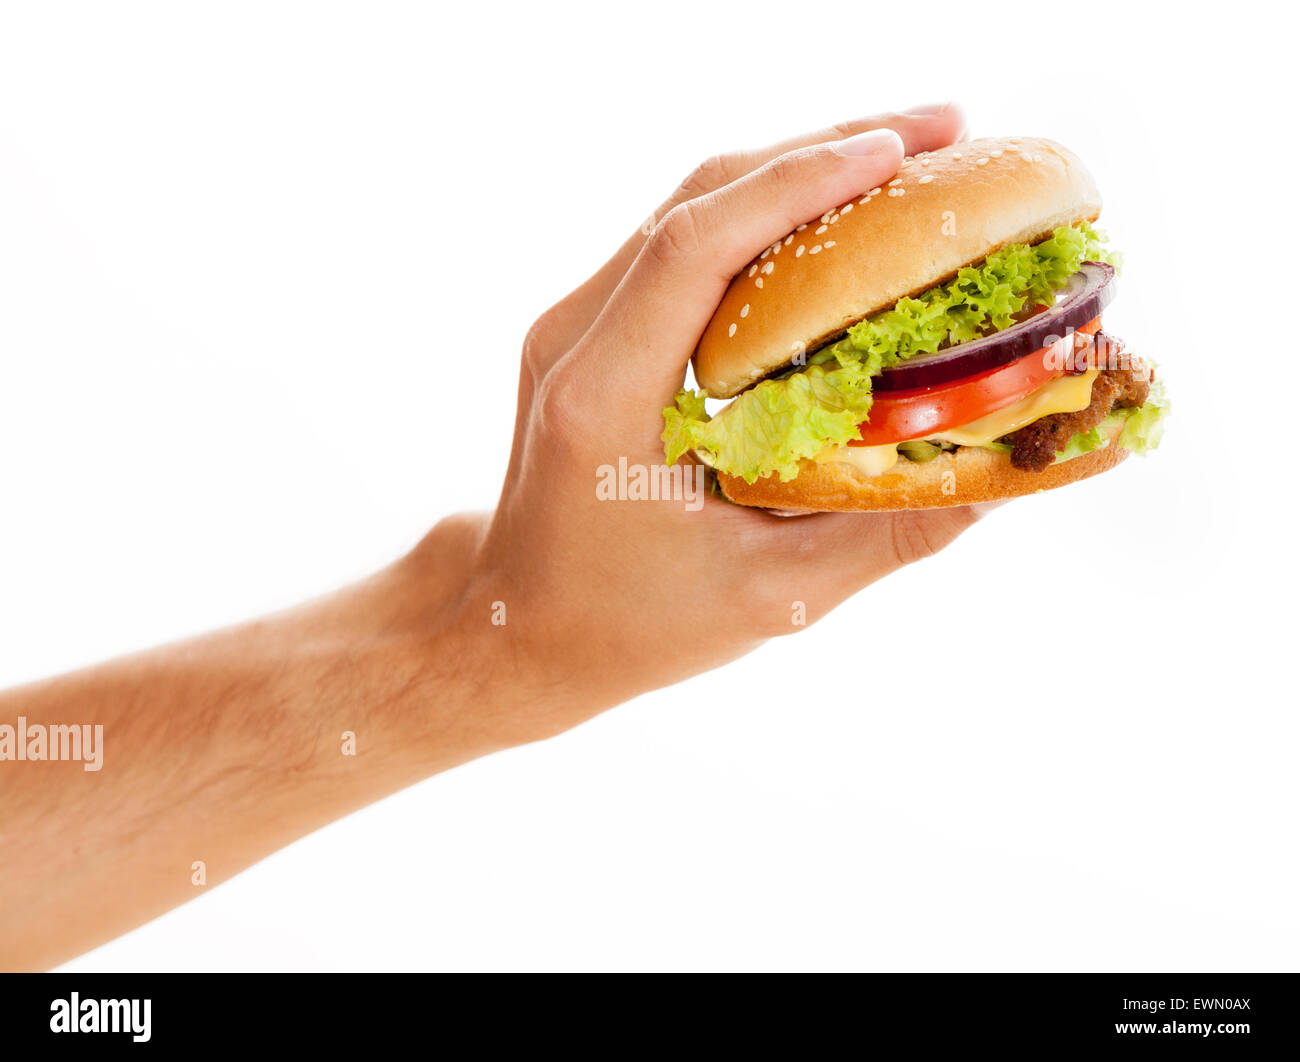 Hands holding a hamburger Stock Photo